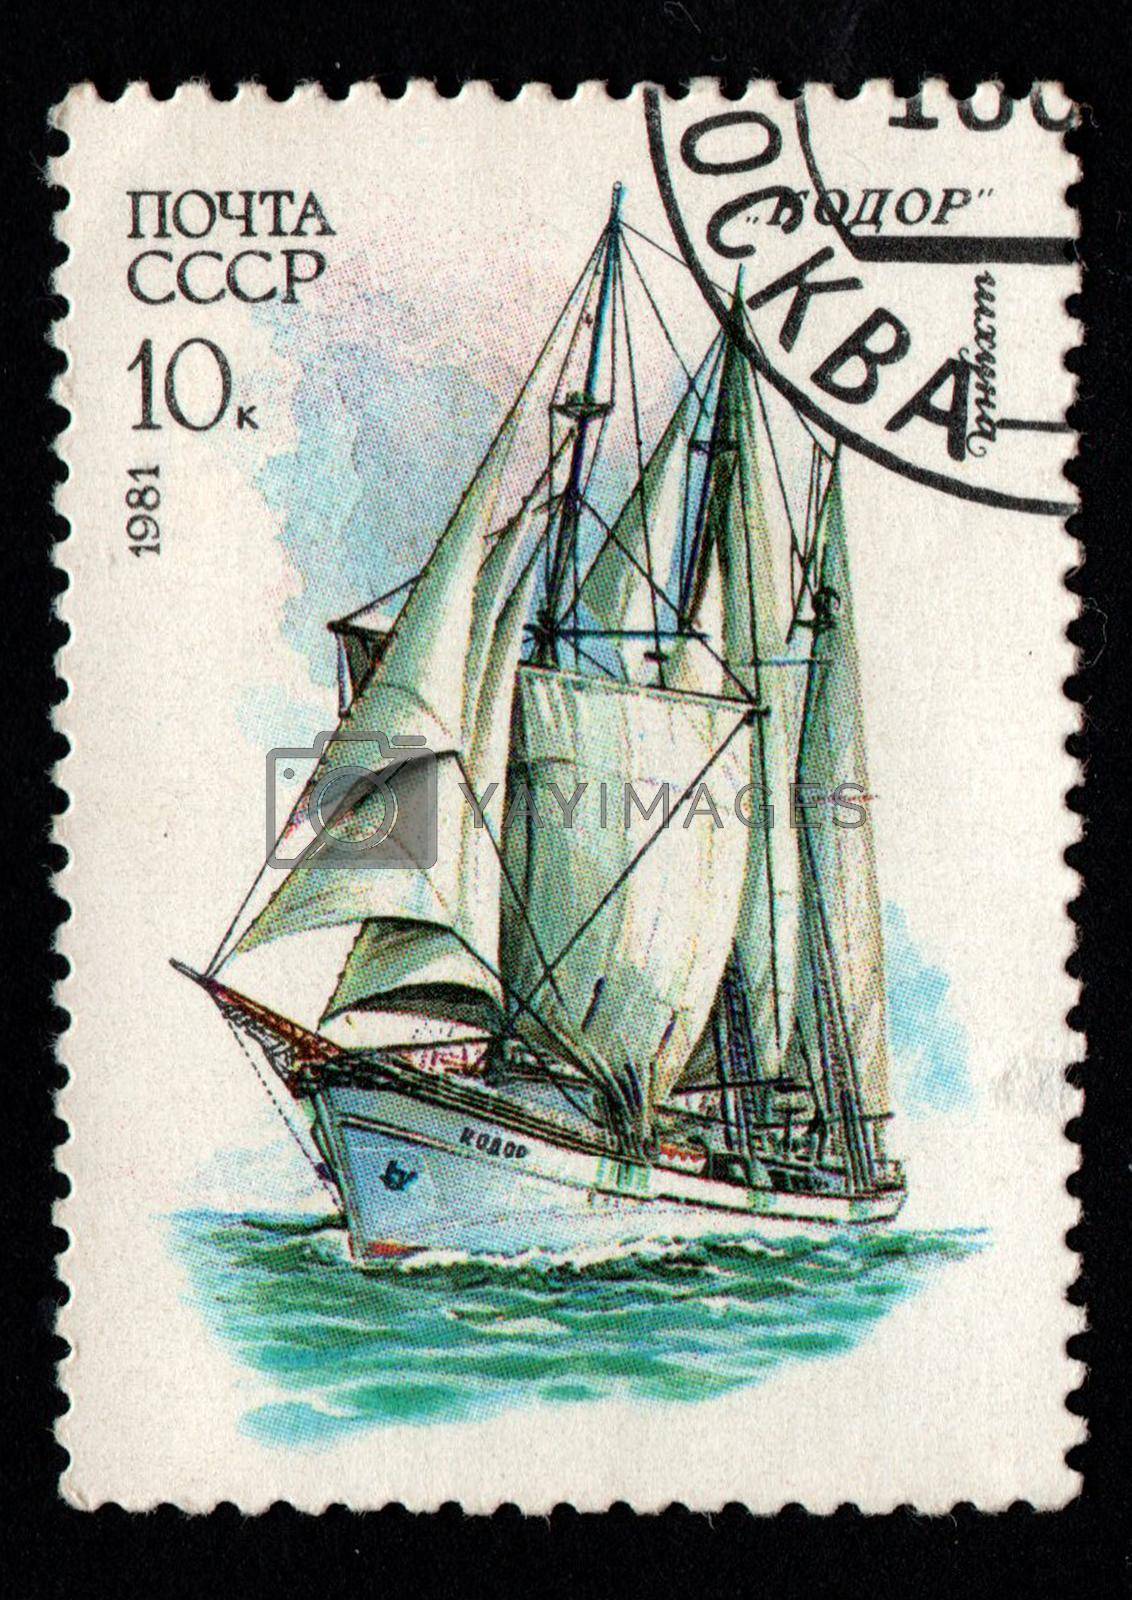 Royalty free image of sailing ship schooner Kodor on a USSR postage stamp by alexmak